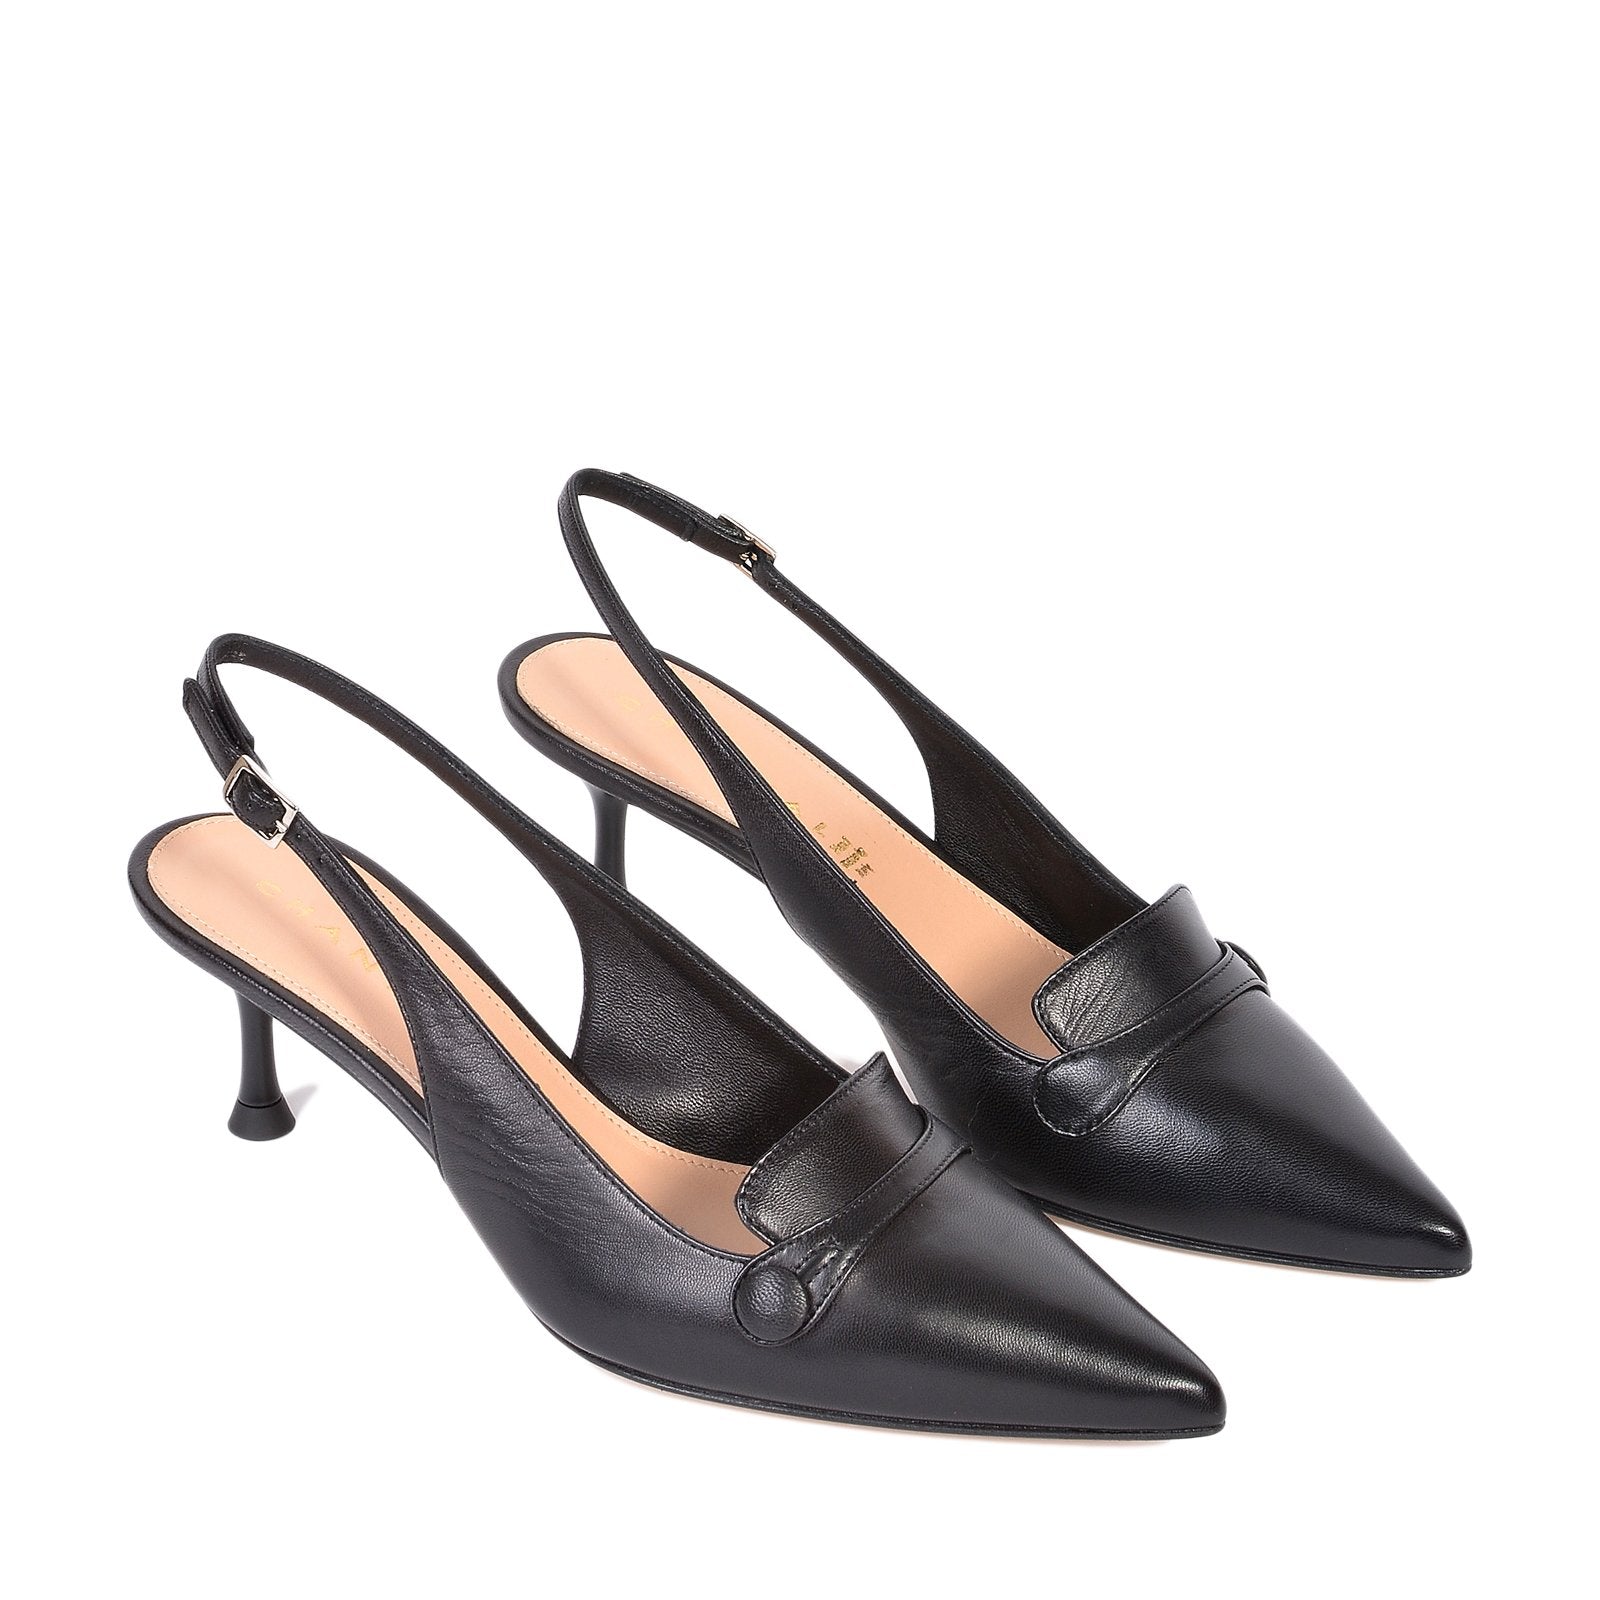 Capretto Sling Back Shoes In Black Heels 1002/Black - 3